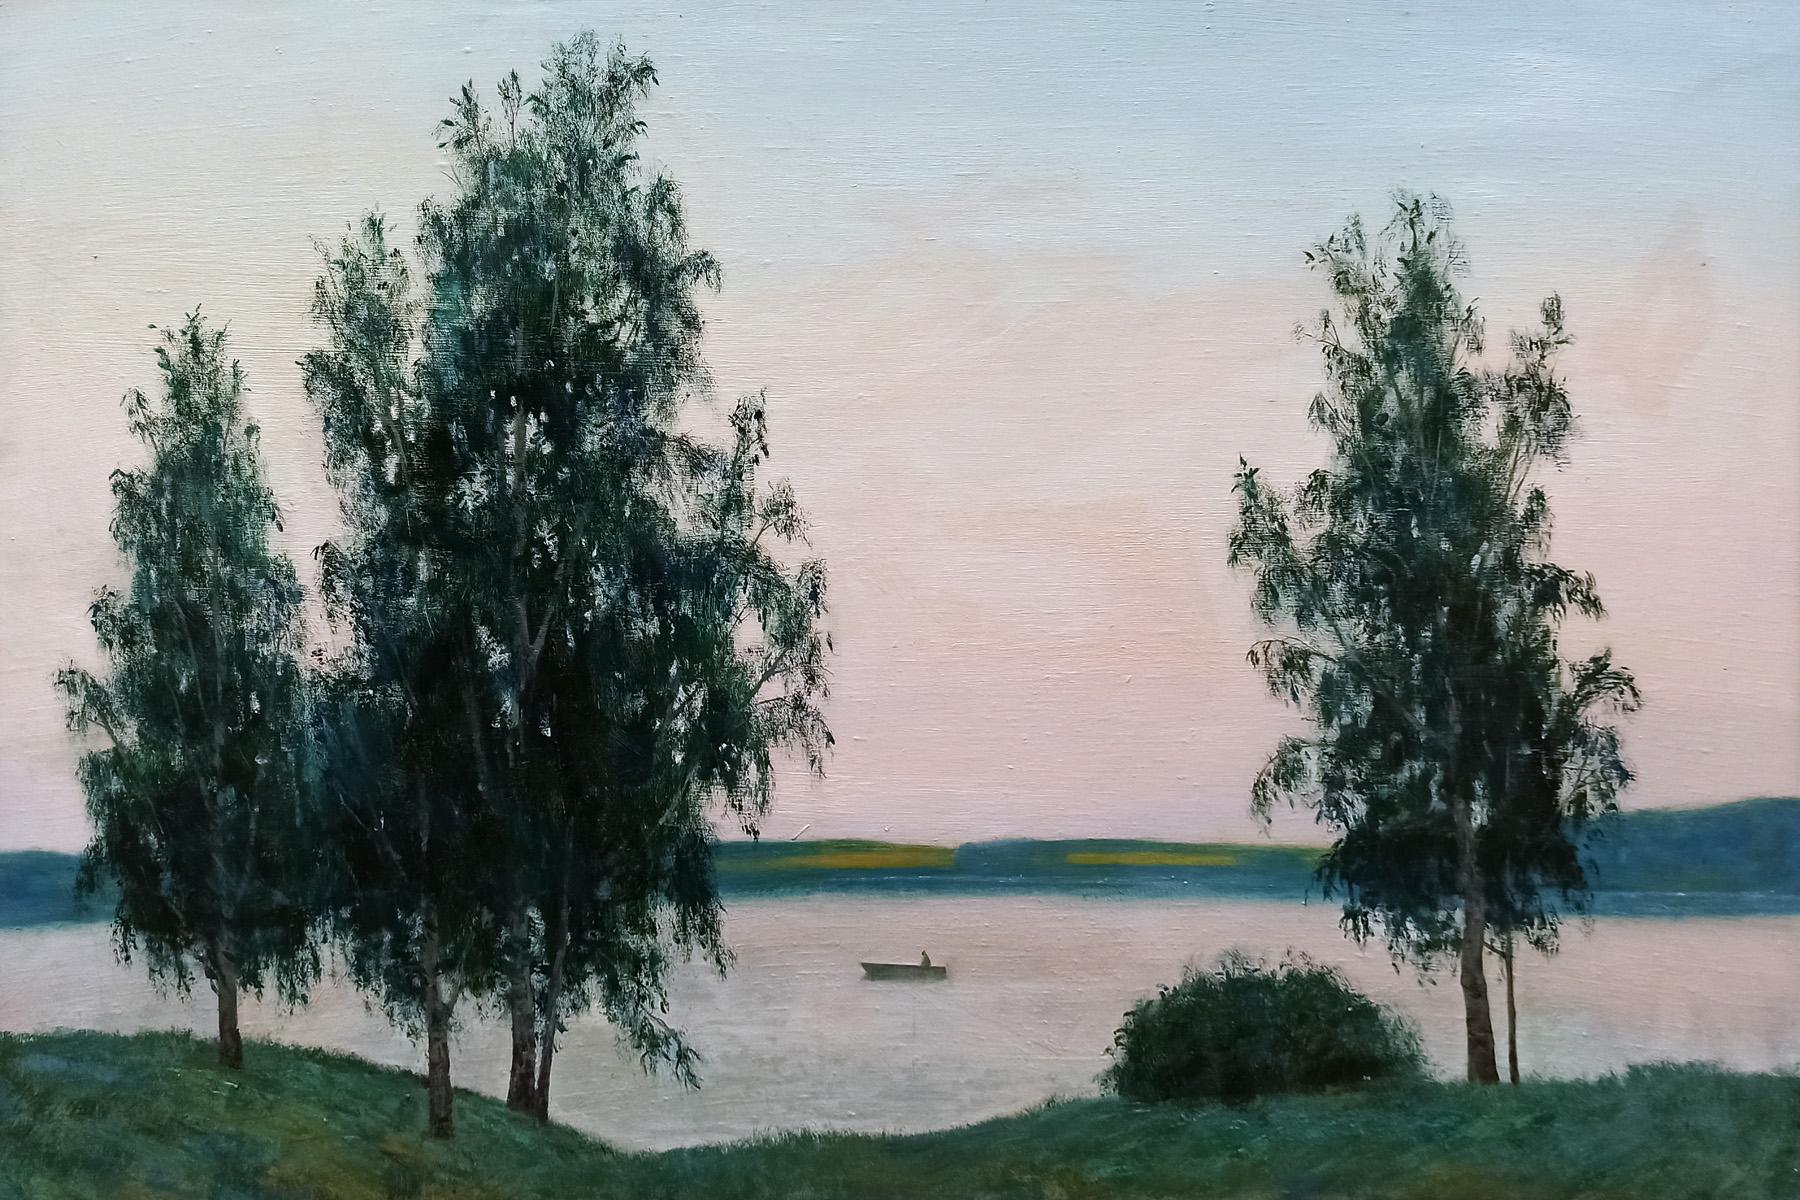 Evening in Michurinskoye. Original modern art painting